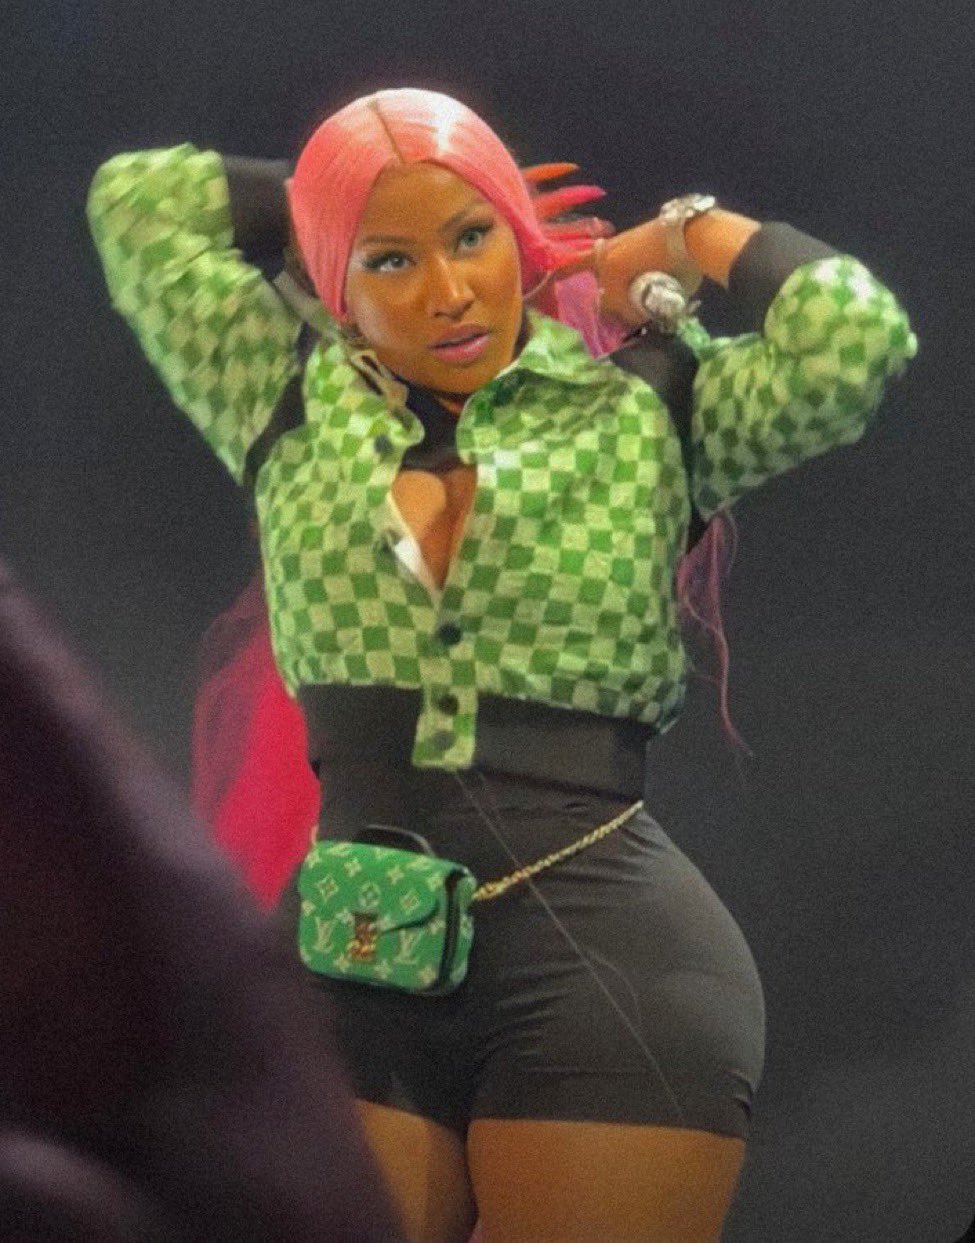 Stats of Minaj on X: Nicki Minaj wearing her chanel bags is a mood. 🥰   / X